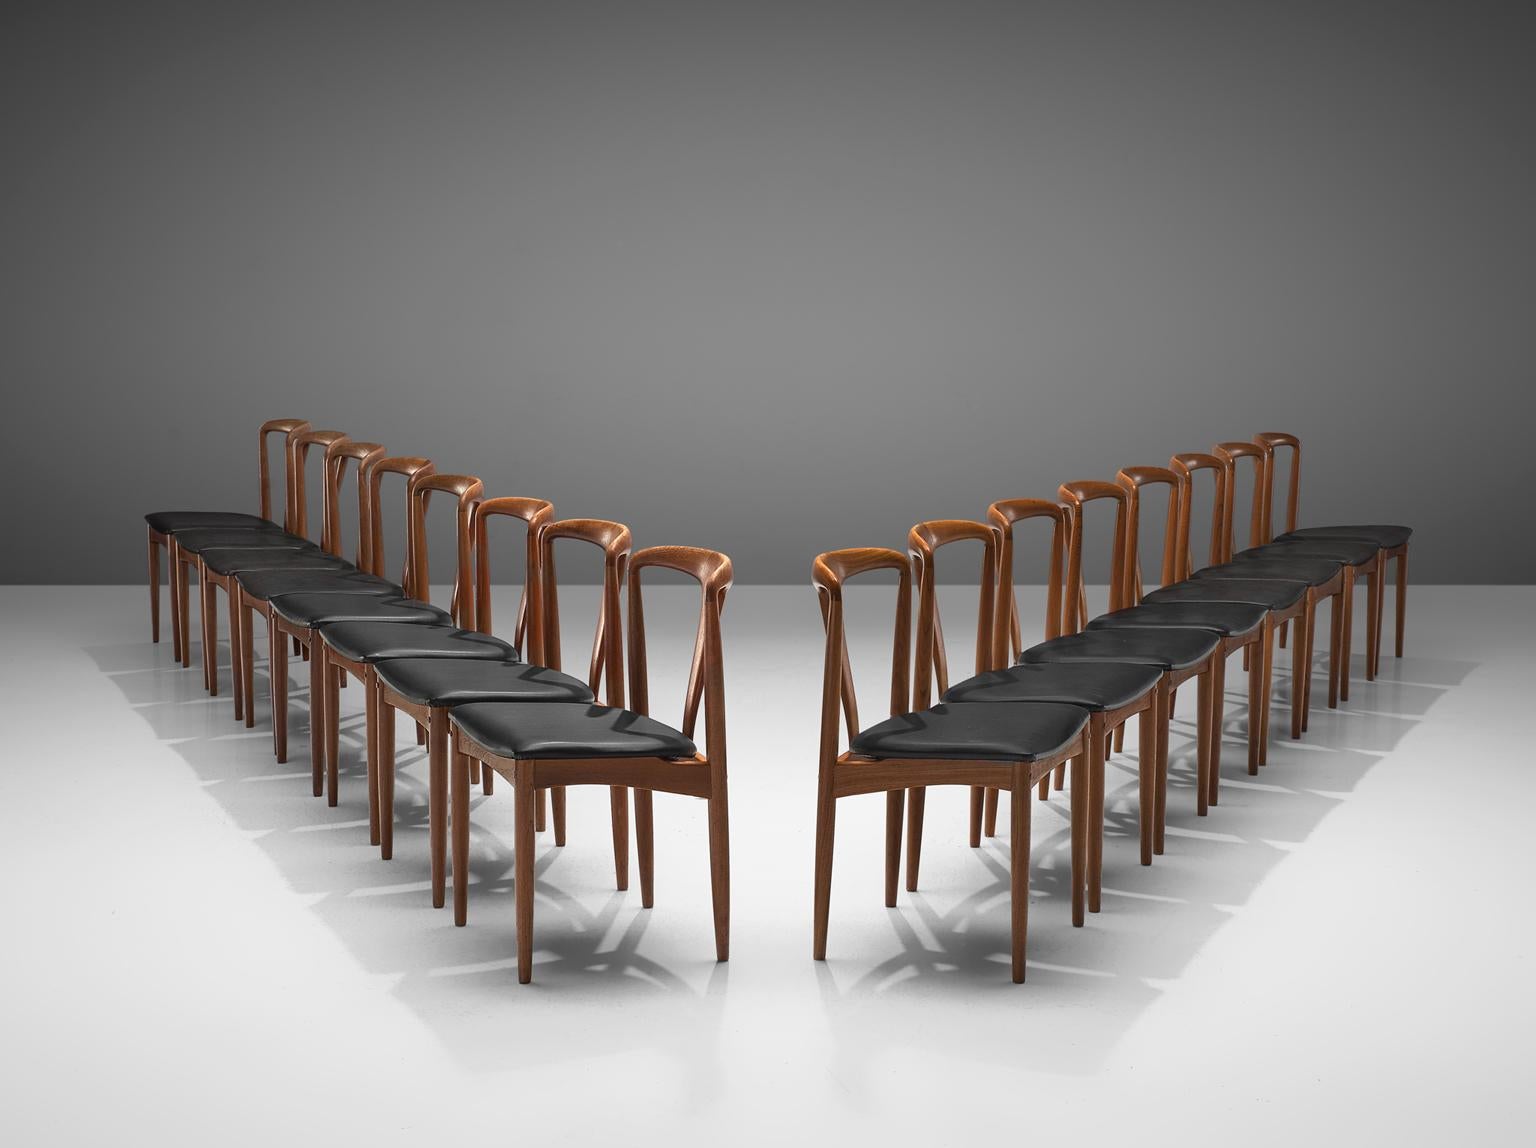 Johannes Andersen for Uldum Møbelfabrik, 'Juliane' set of 16 dining chairs, teak and leatherette, Denmark, 1960s

This large set of 16 dining chairs is designed by Danish Johannes Andersen and produced by Uldum Møbelfrabrik in Denmark. The set is